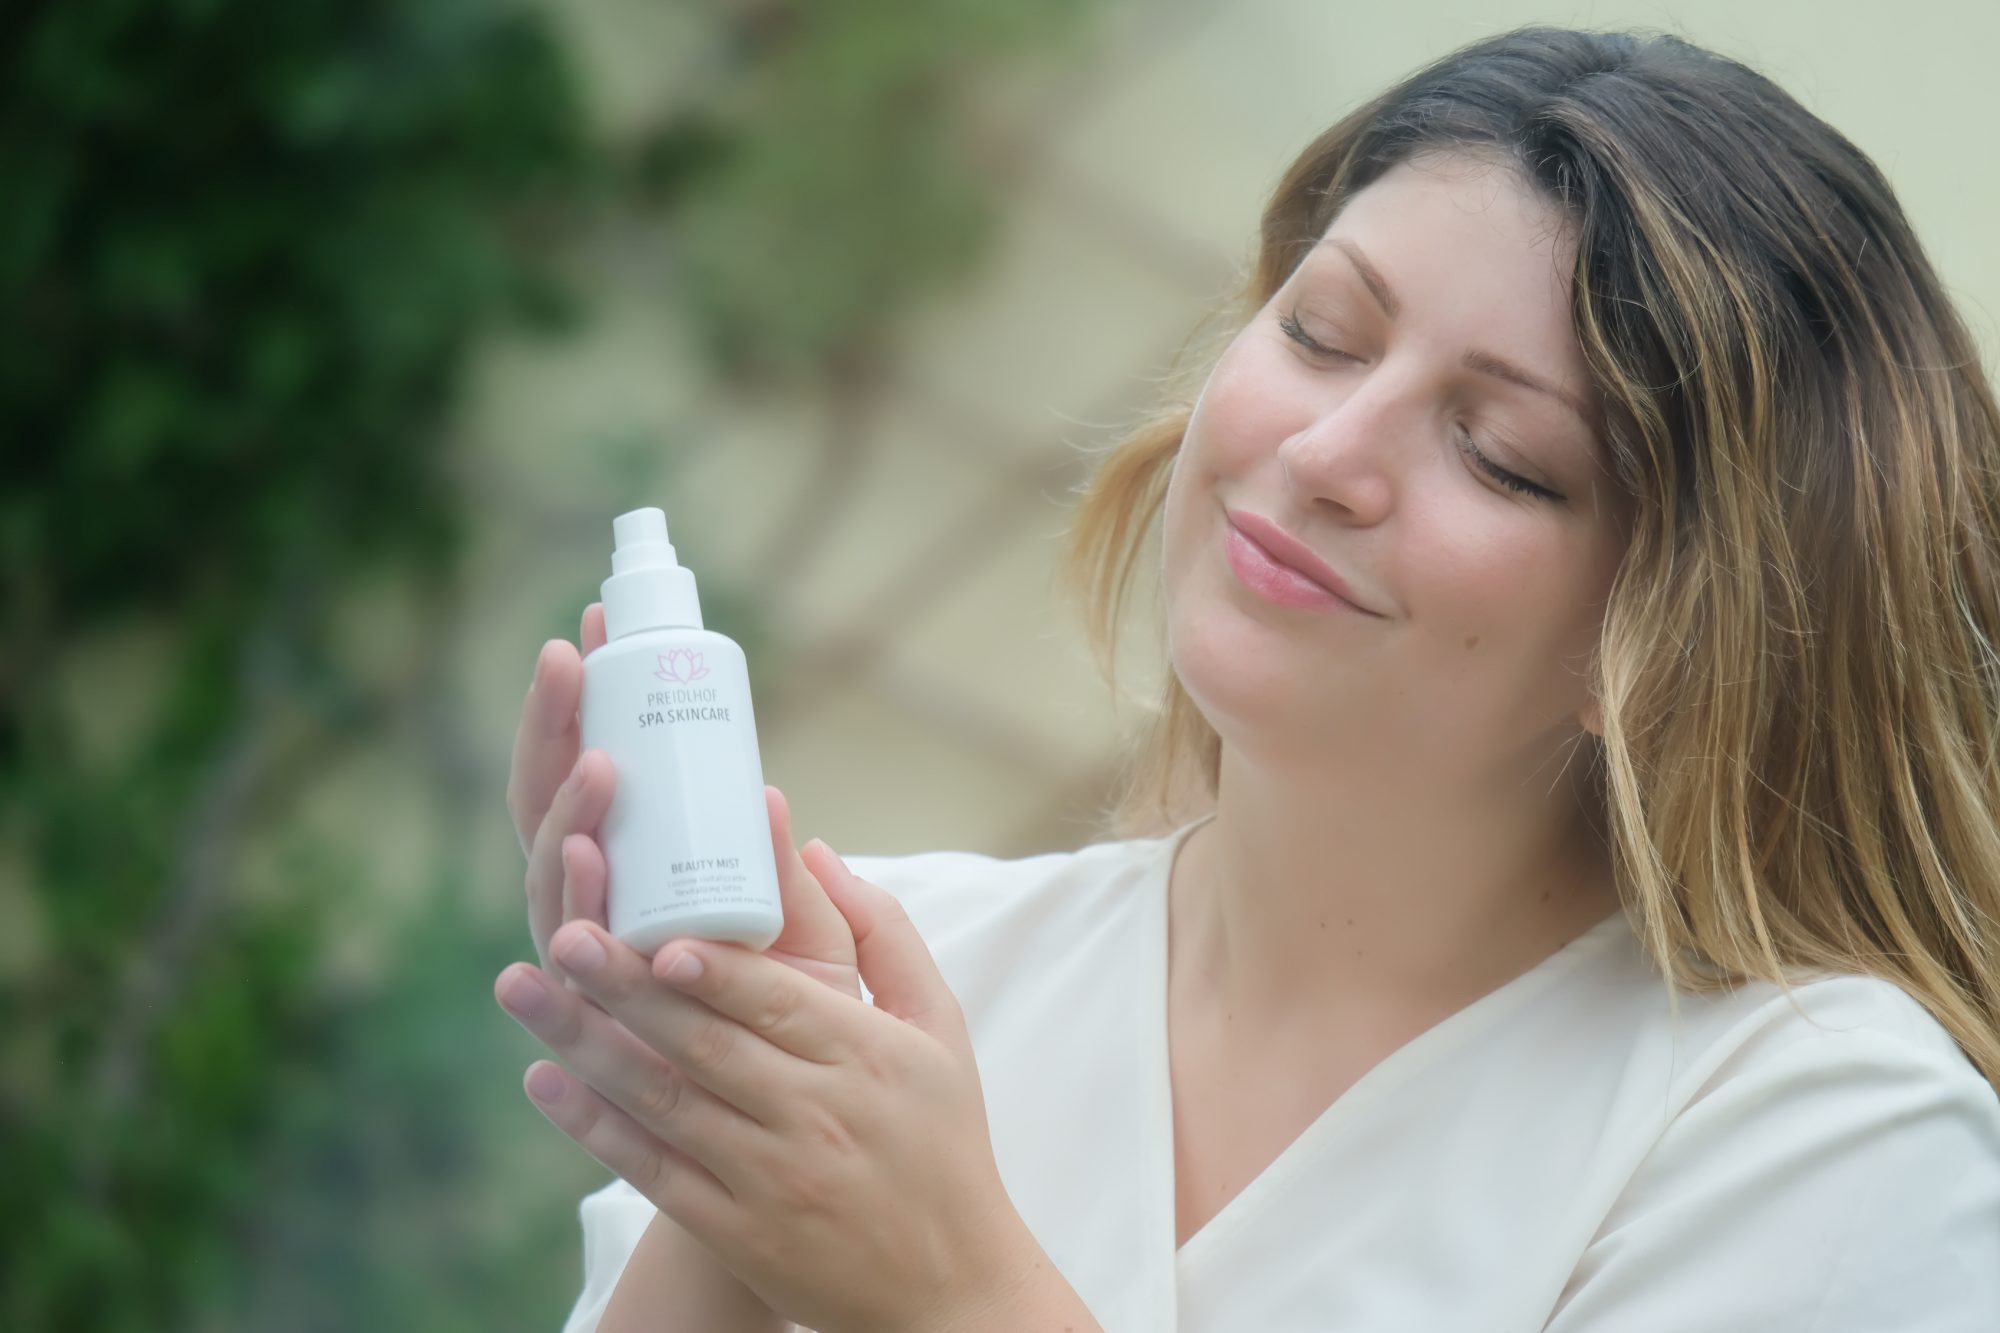 Preidlhof Spa Skincare clean vegan essential cosmetic line